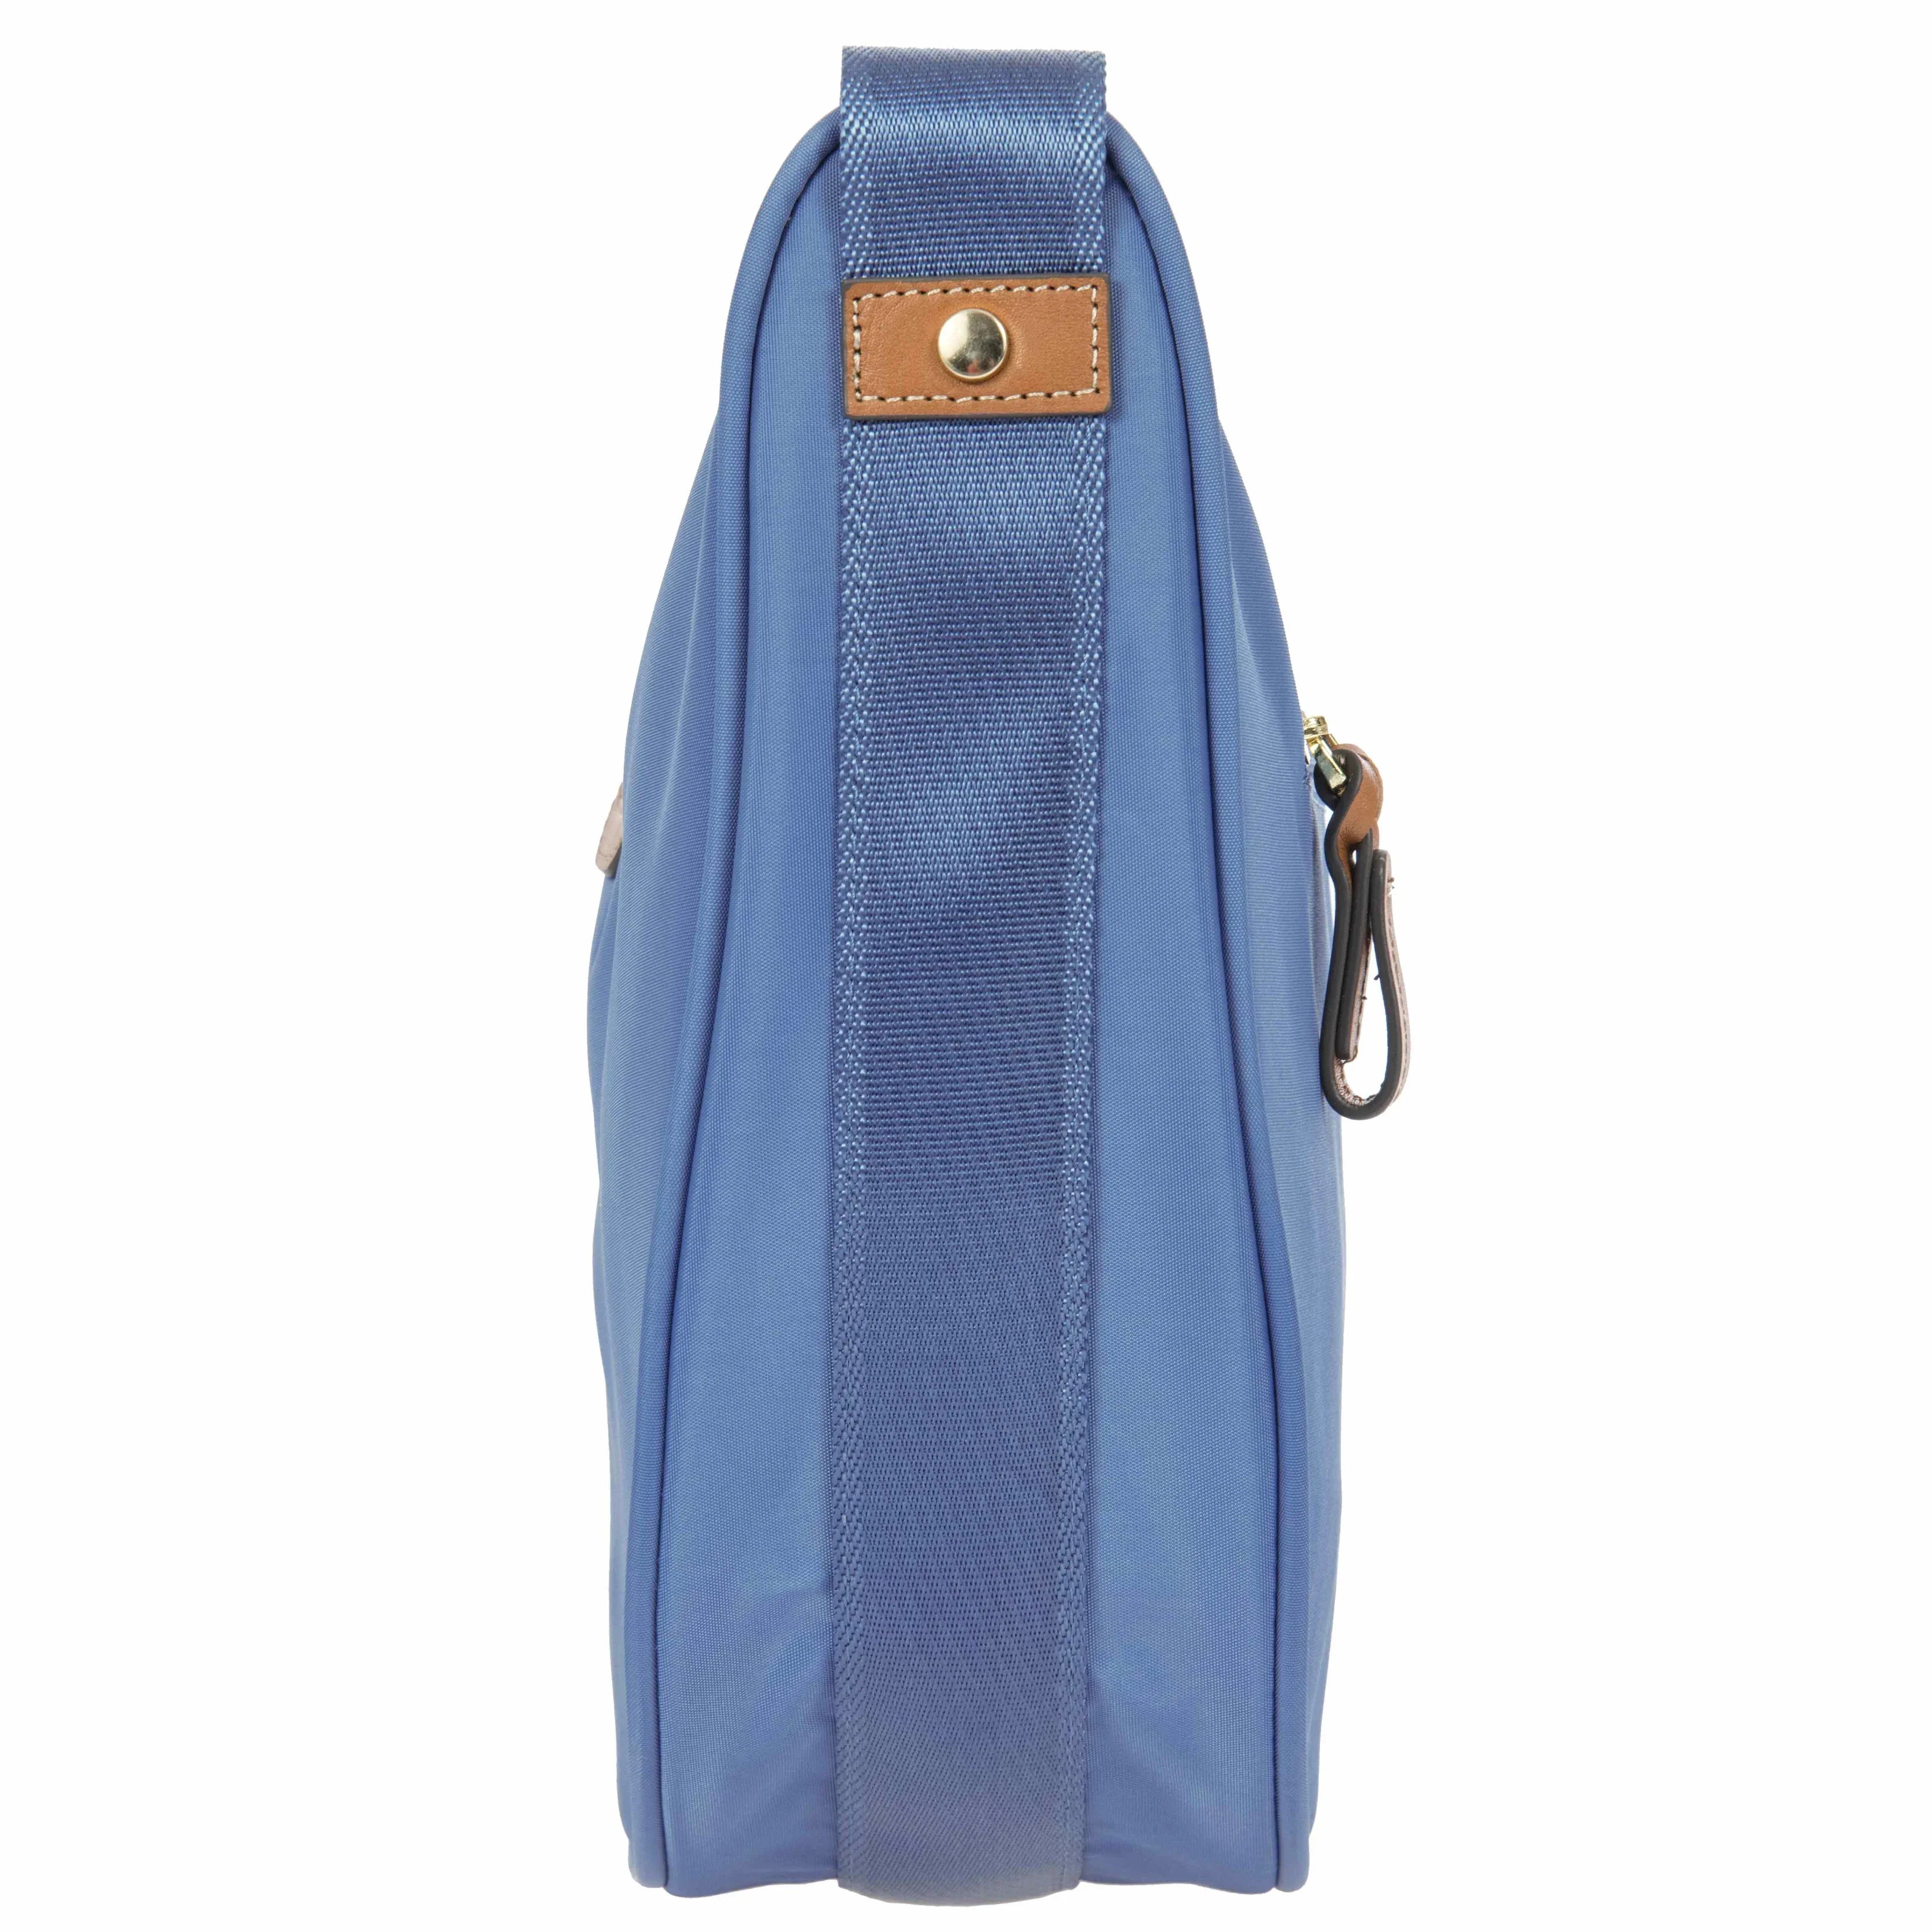 Brics X-Bag Damentasche 33 cm - Sahara